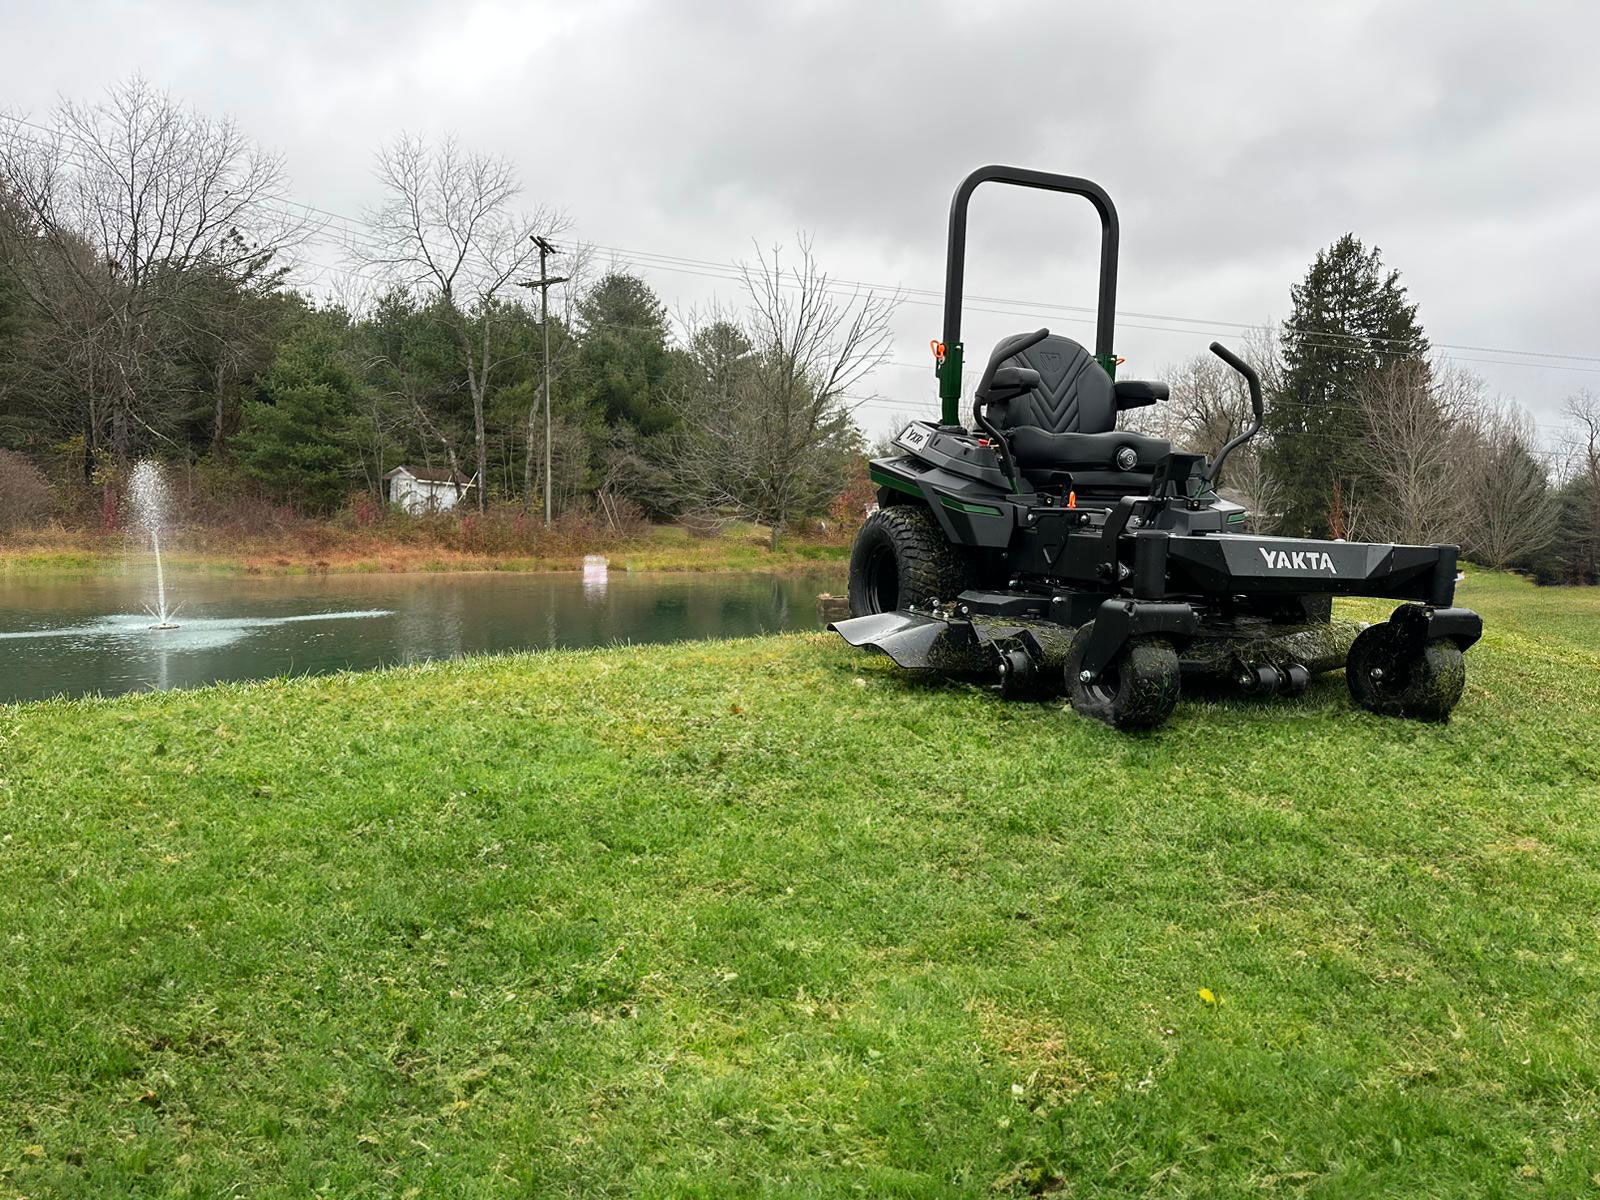 Yakta YXR710 Zero-turn Lawn Mower sitting in front of pond